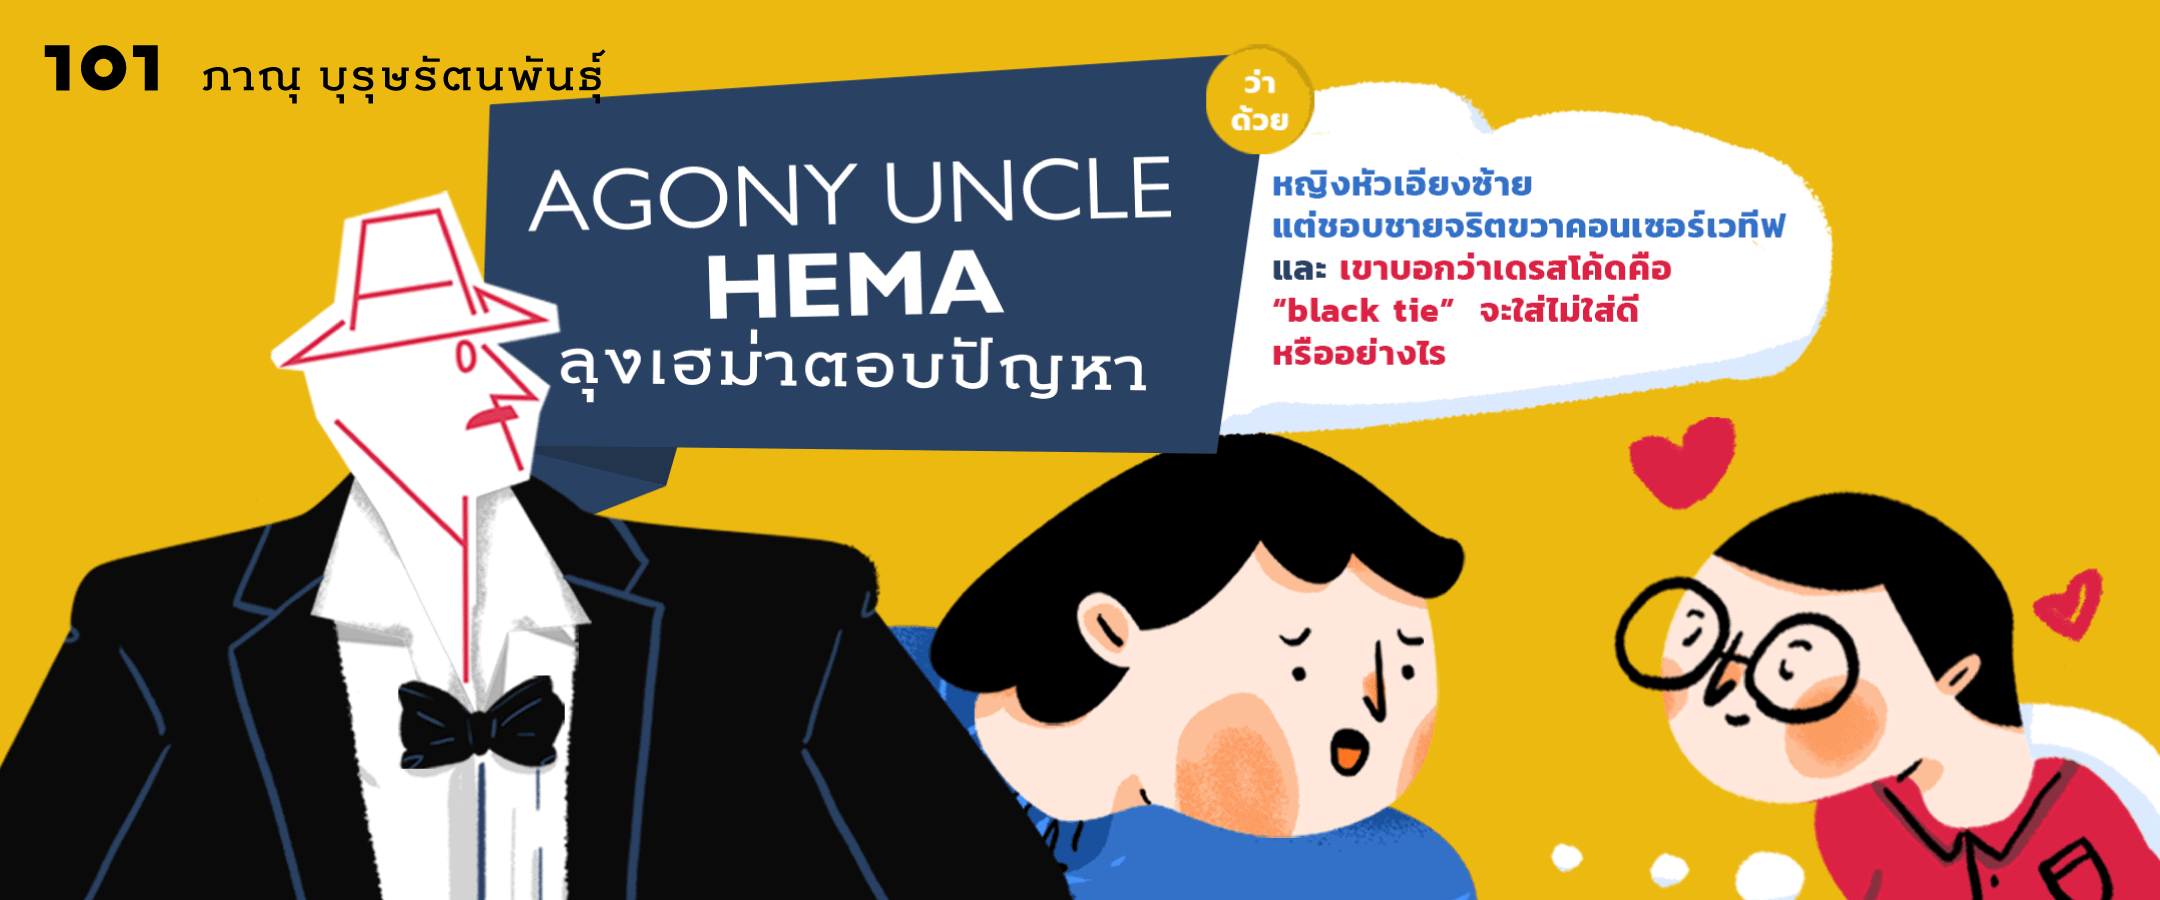 Agony Uncle* Hema ลุงเฮม่าตอบปัญหา